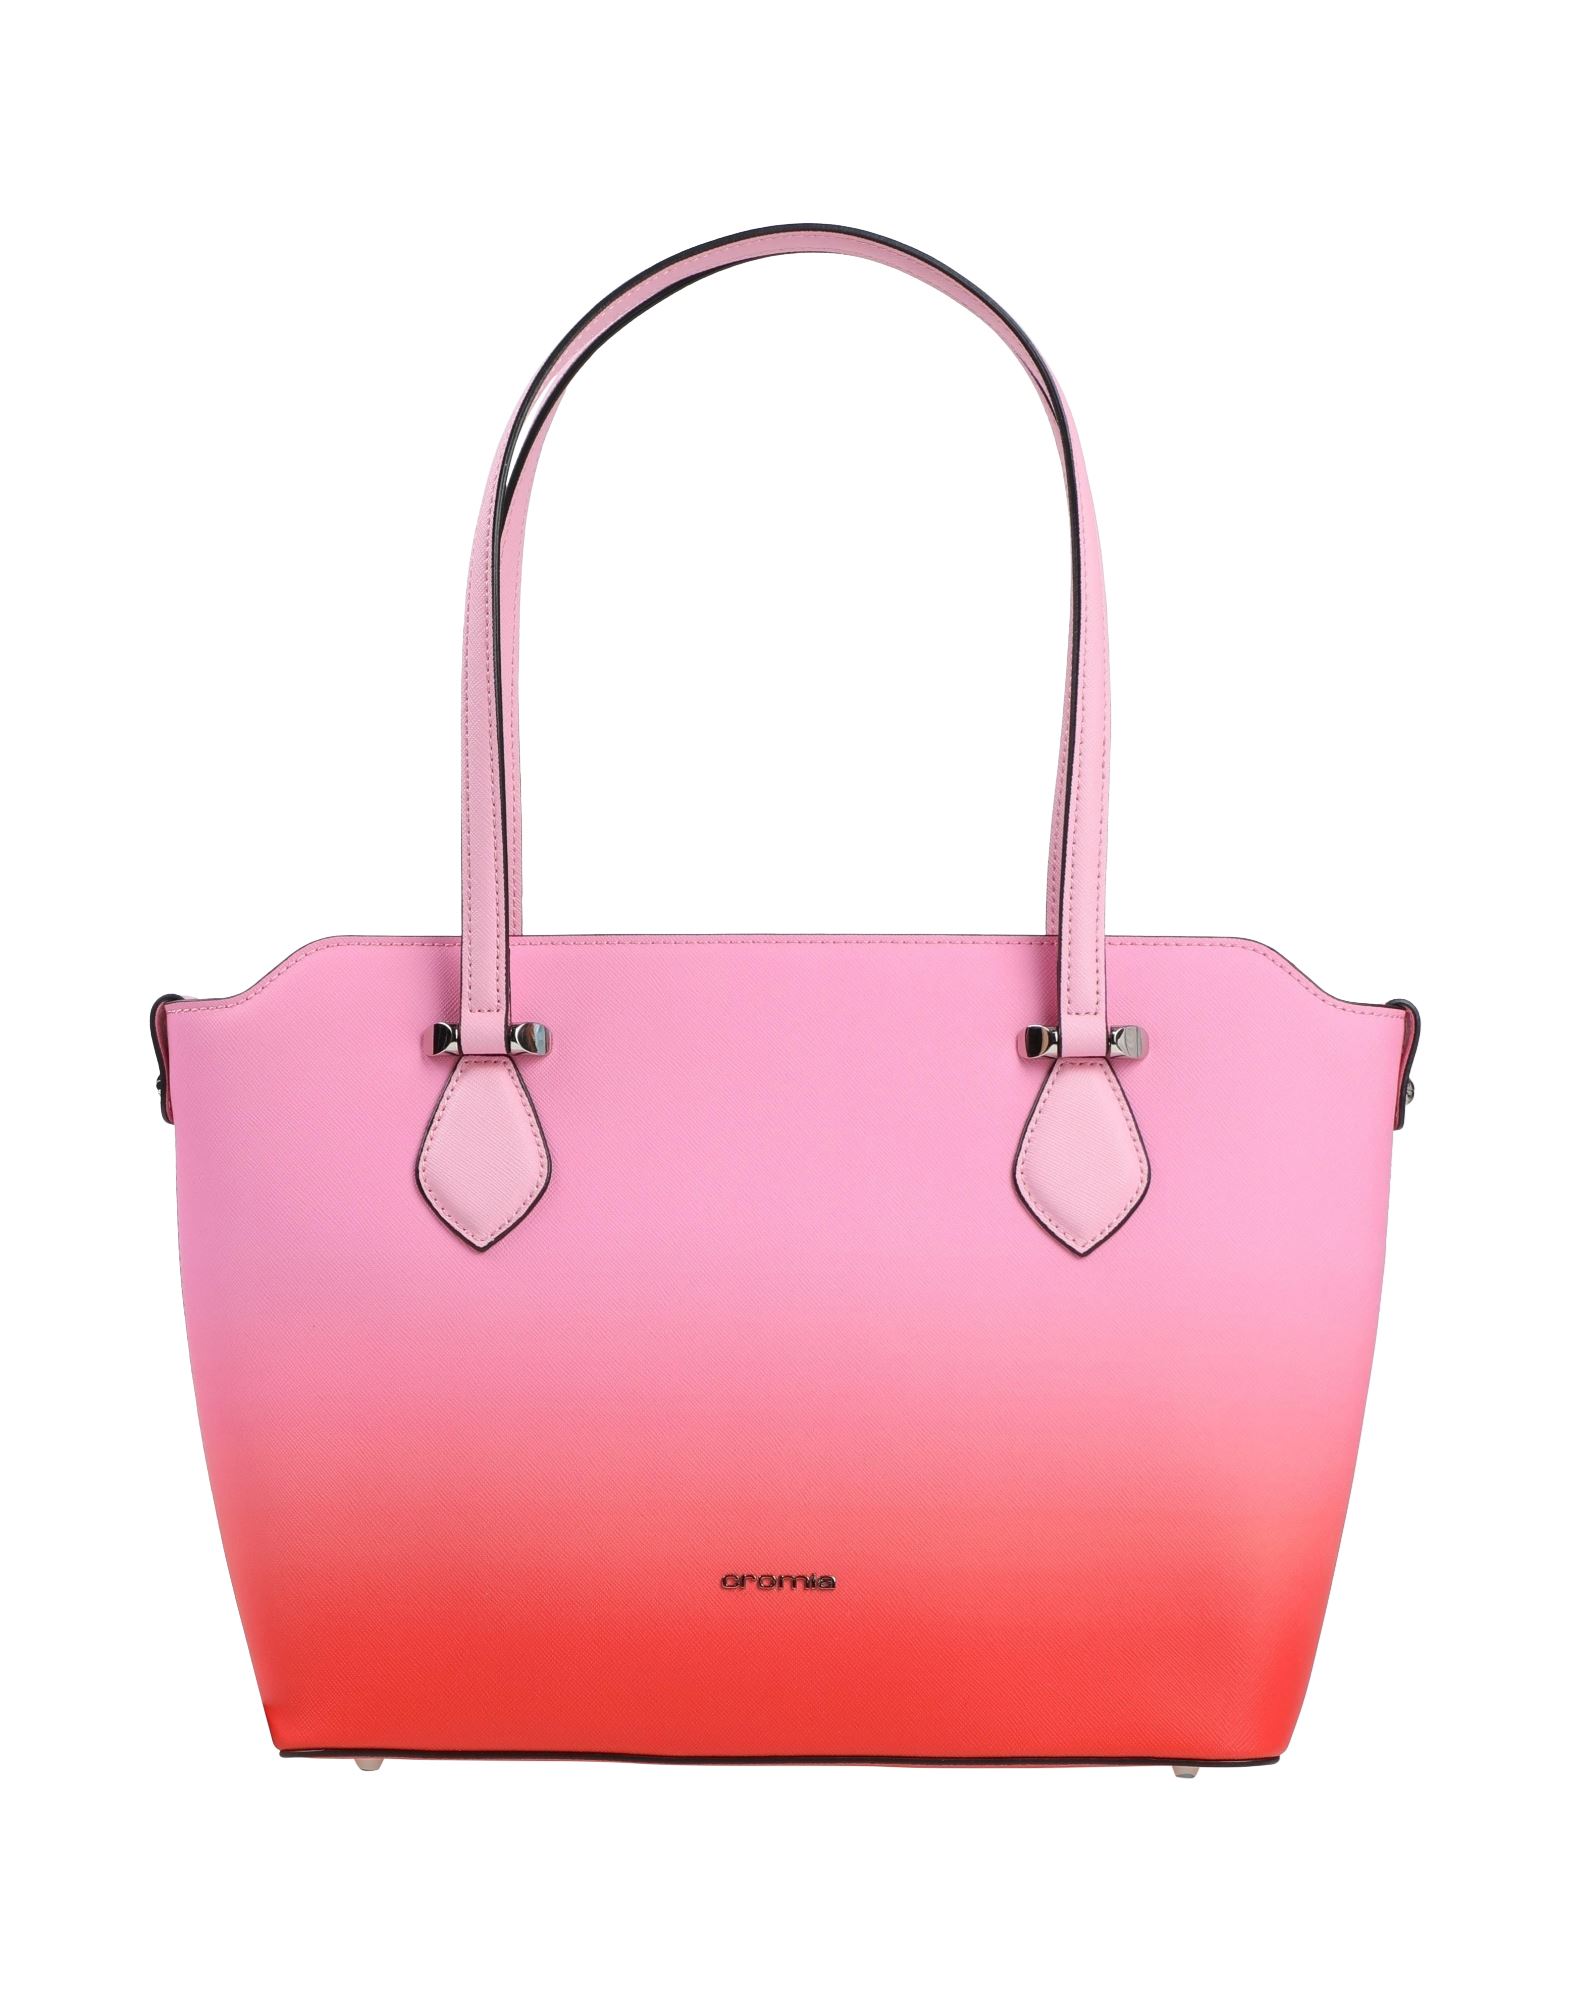 CROMIA Handbags - Item 45553108